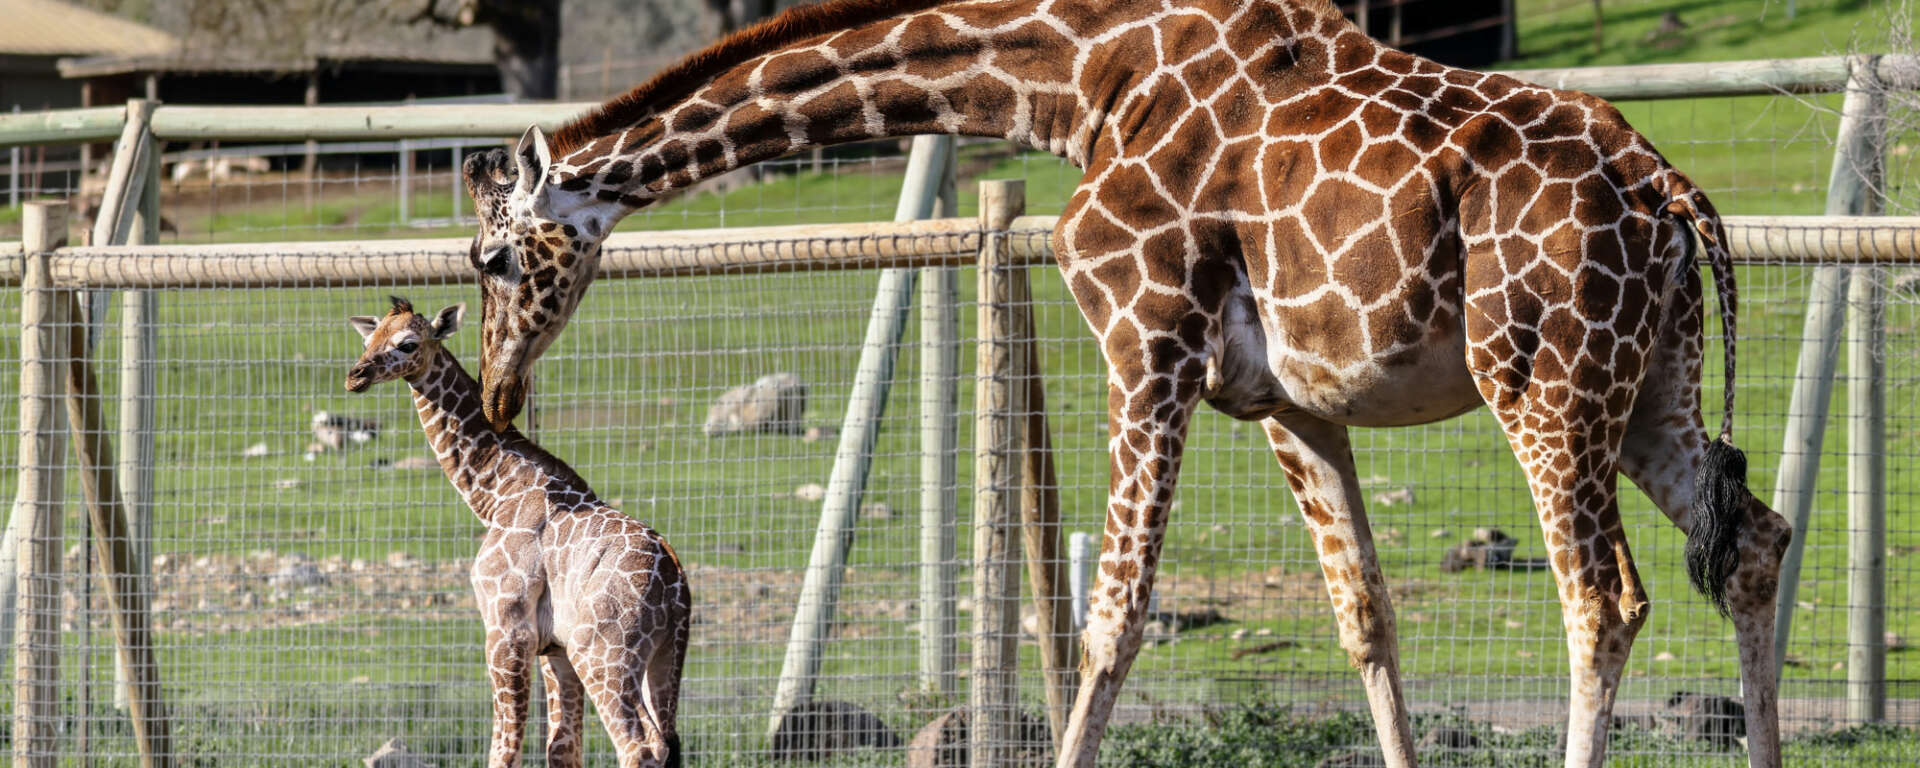 giraffe baby and mom